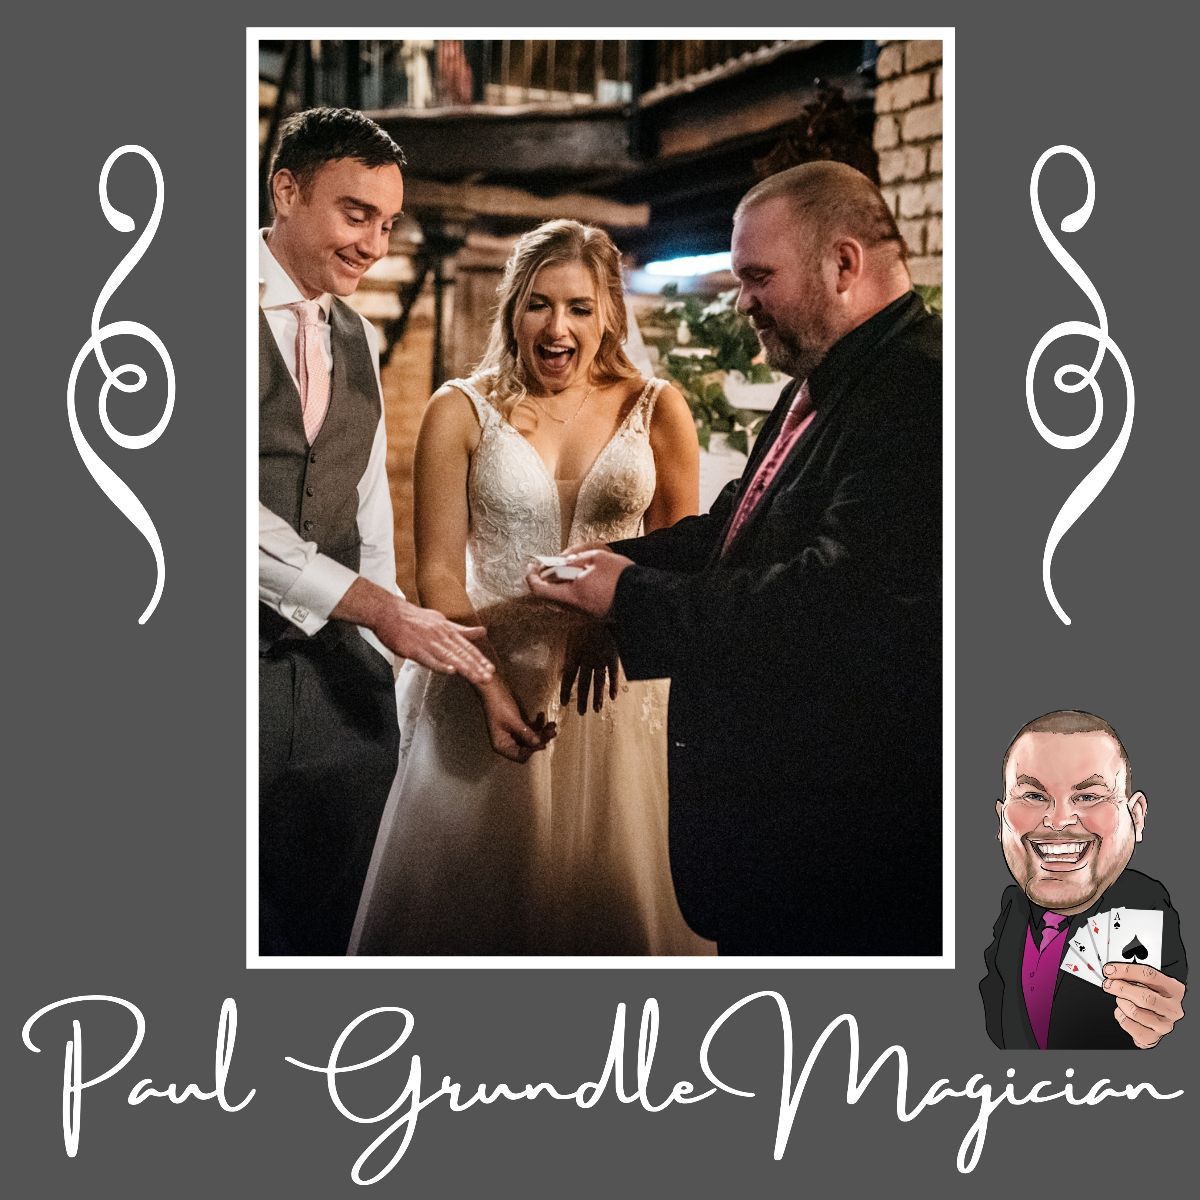 Paul Grundle magician-Image-28